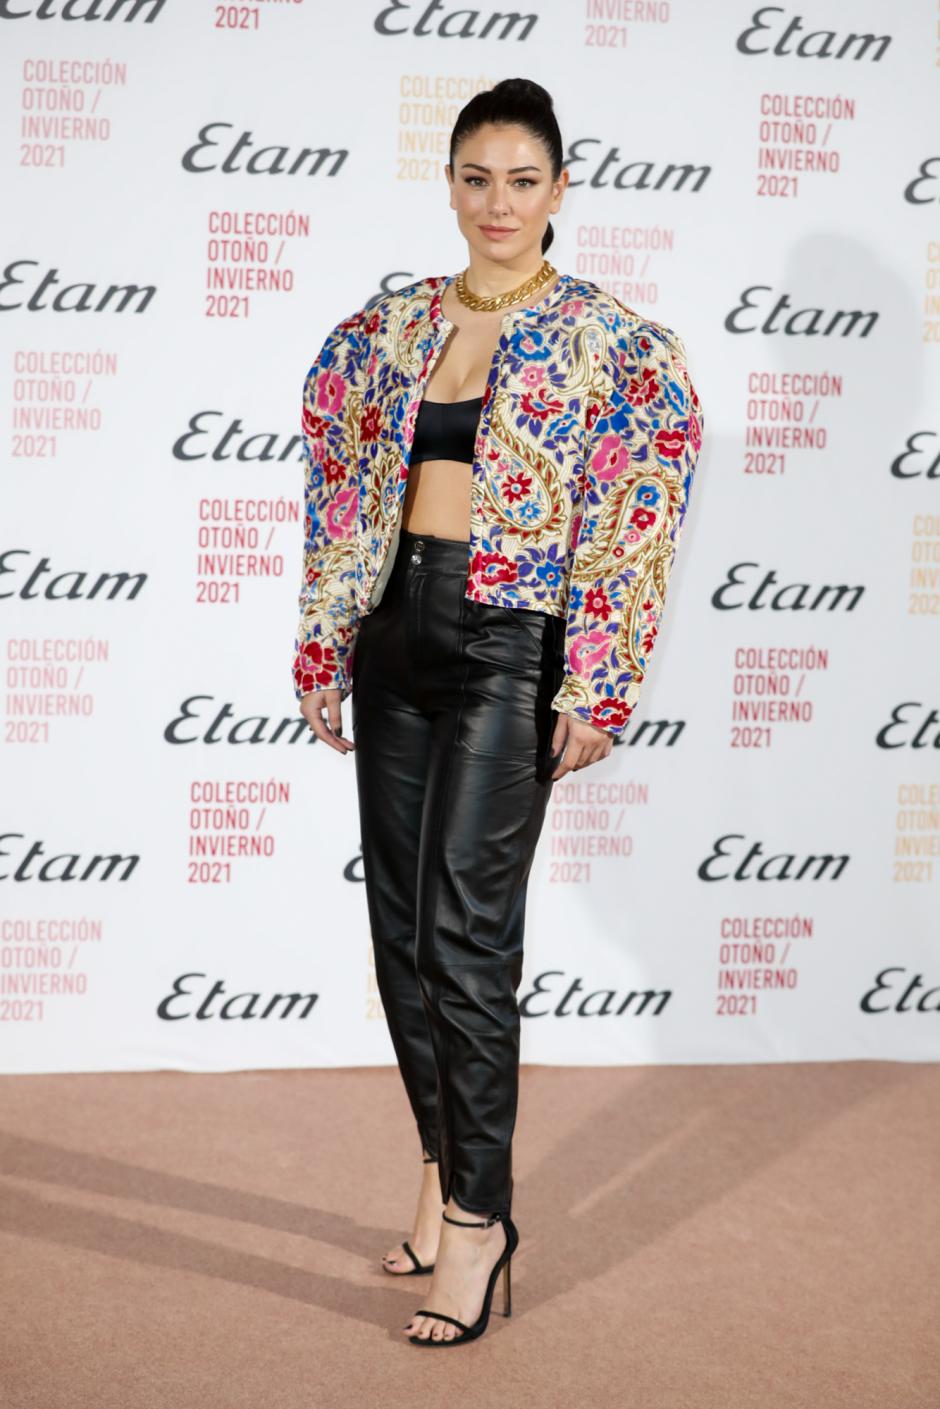 Actress Blanca Suarez during Etam brand event in Madrid on  Wednesday, 27 October 2021.